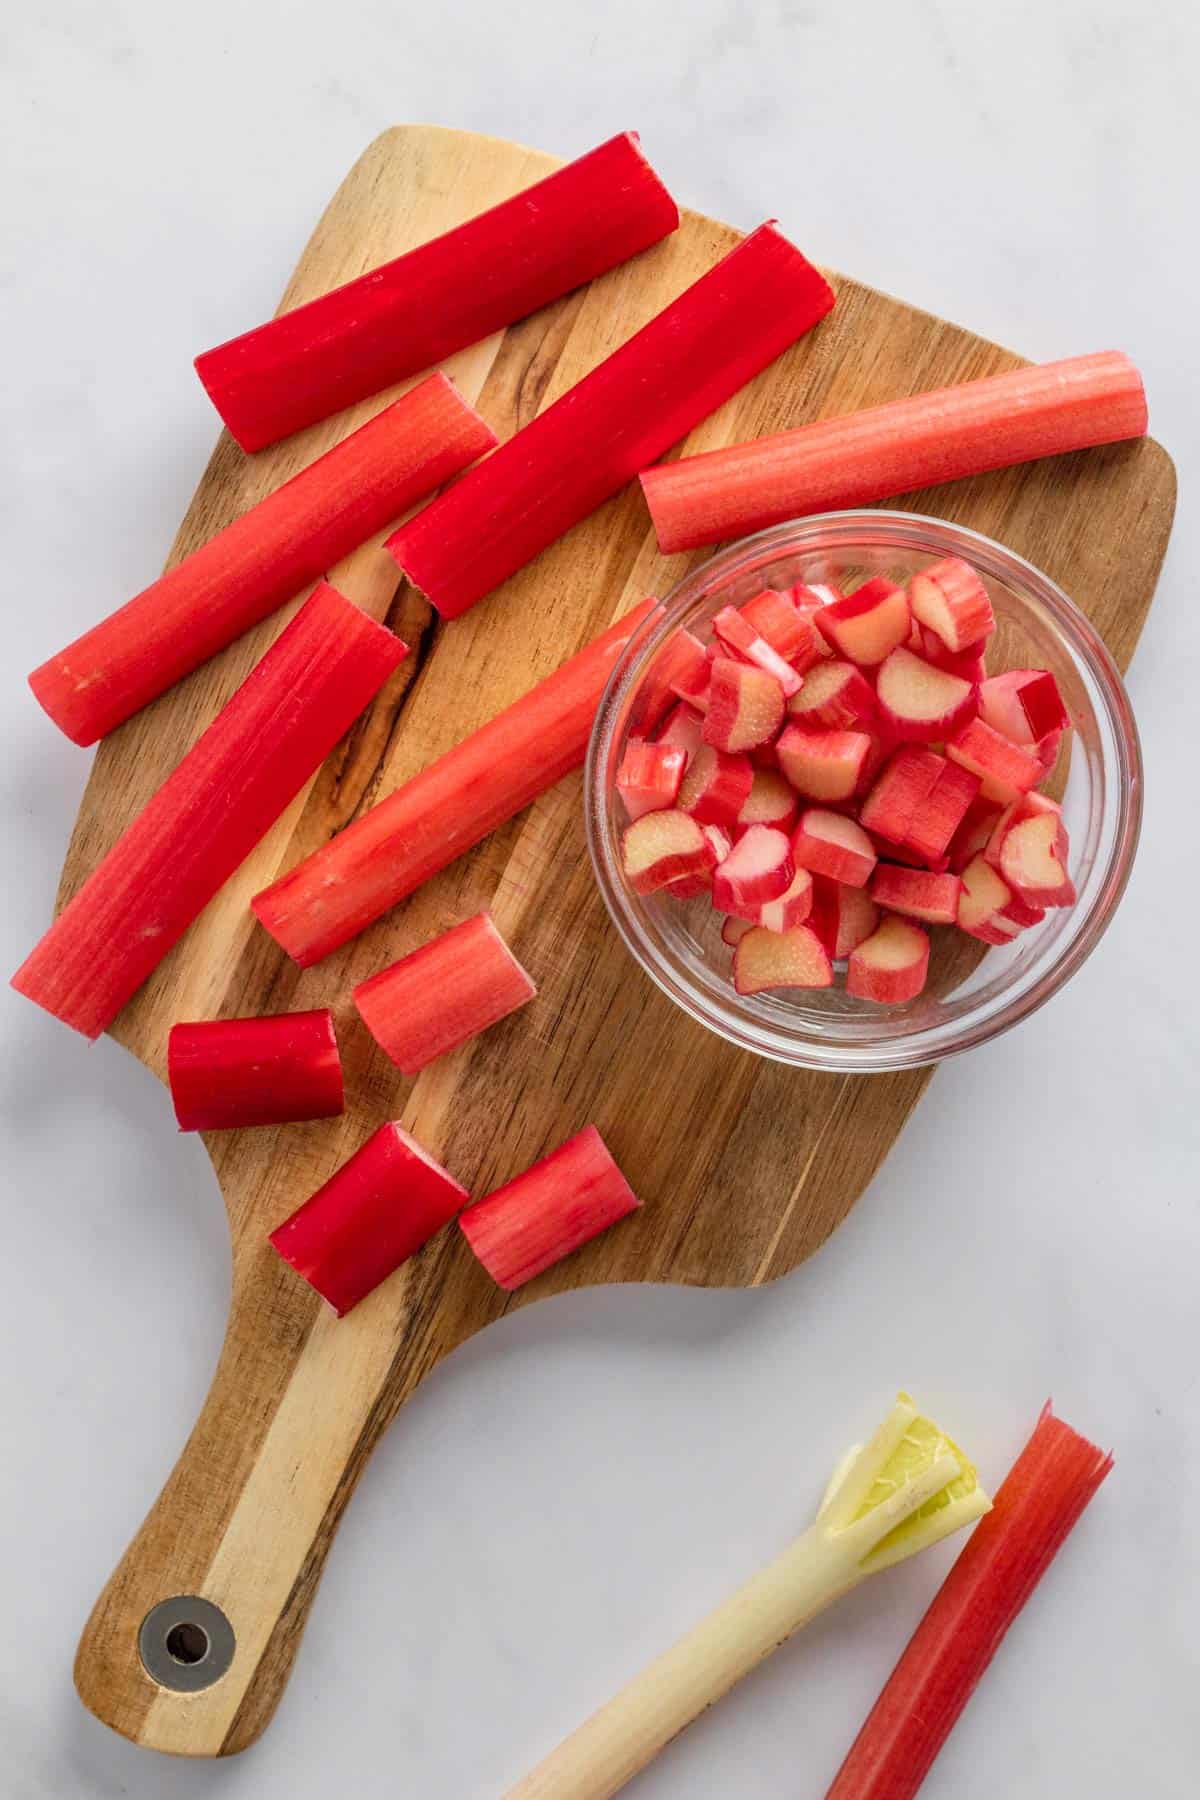 slices rhubarb on wooden cutting board